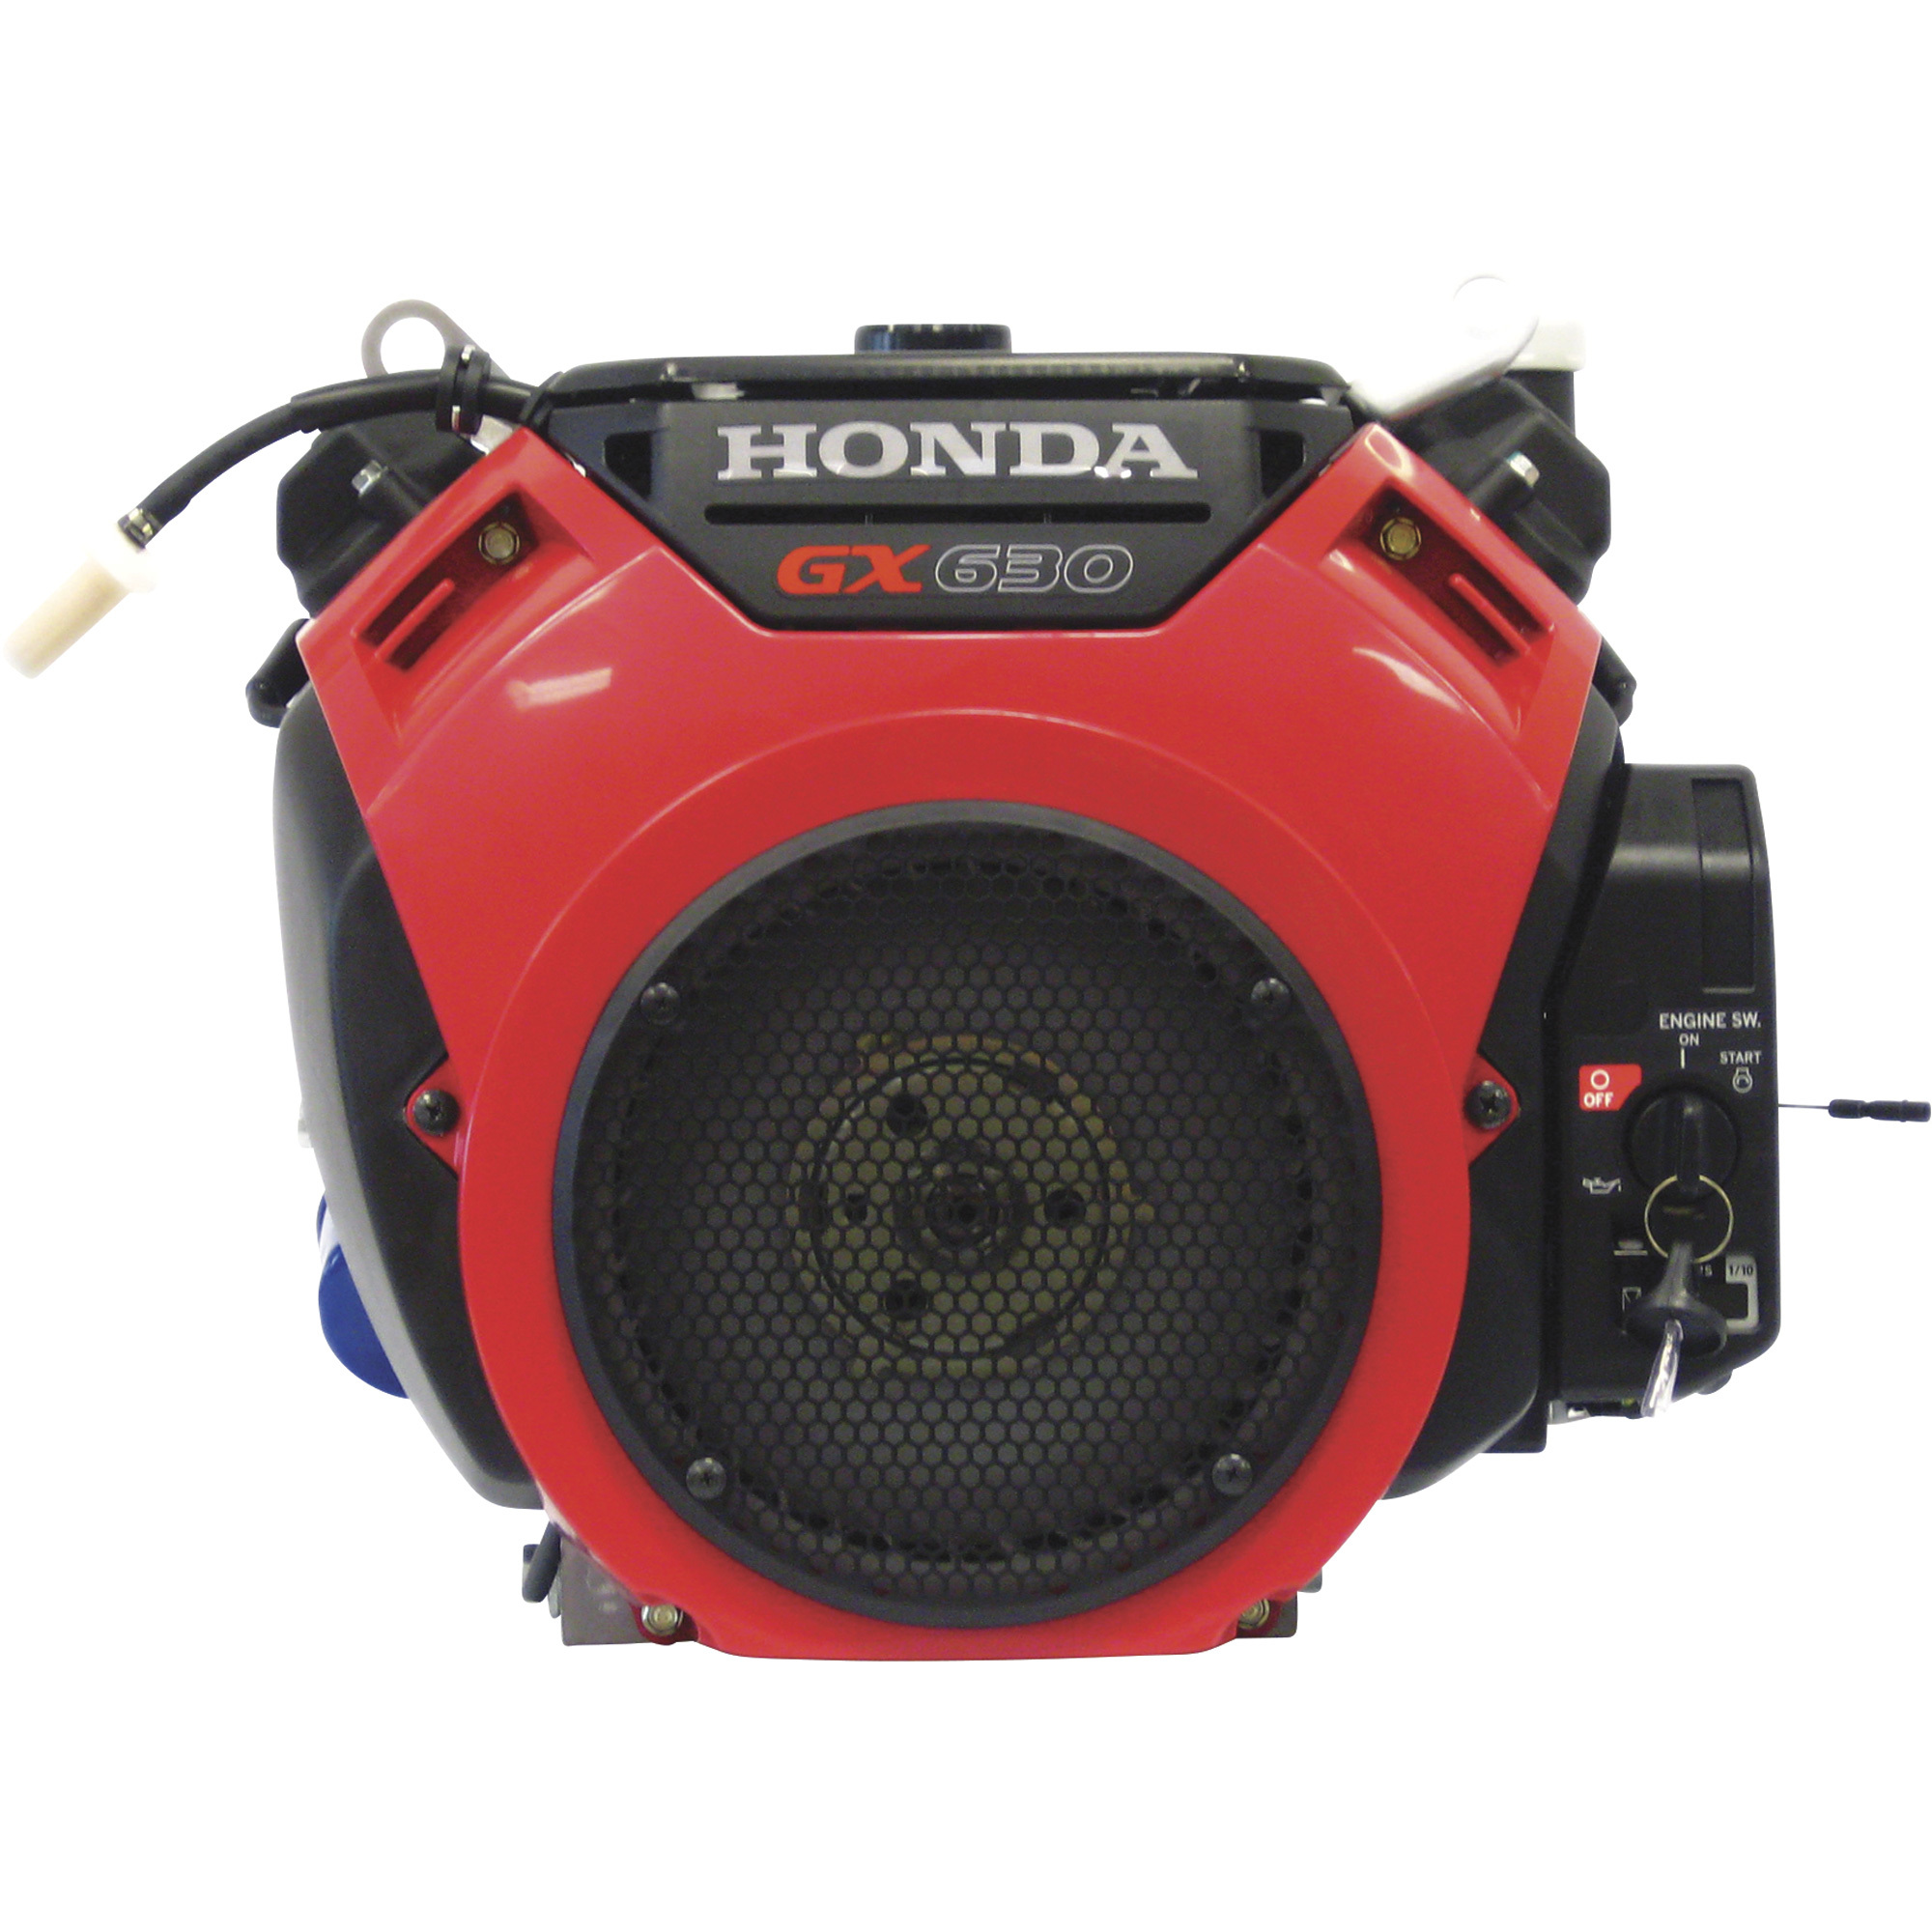 Honda V-Twin Horizontal OHV Engine with Electric Start â 688cc, GX Series, (Air Cleaner and Housing Not Included), Model GX630RHTXF2